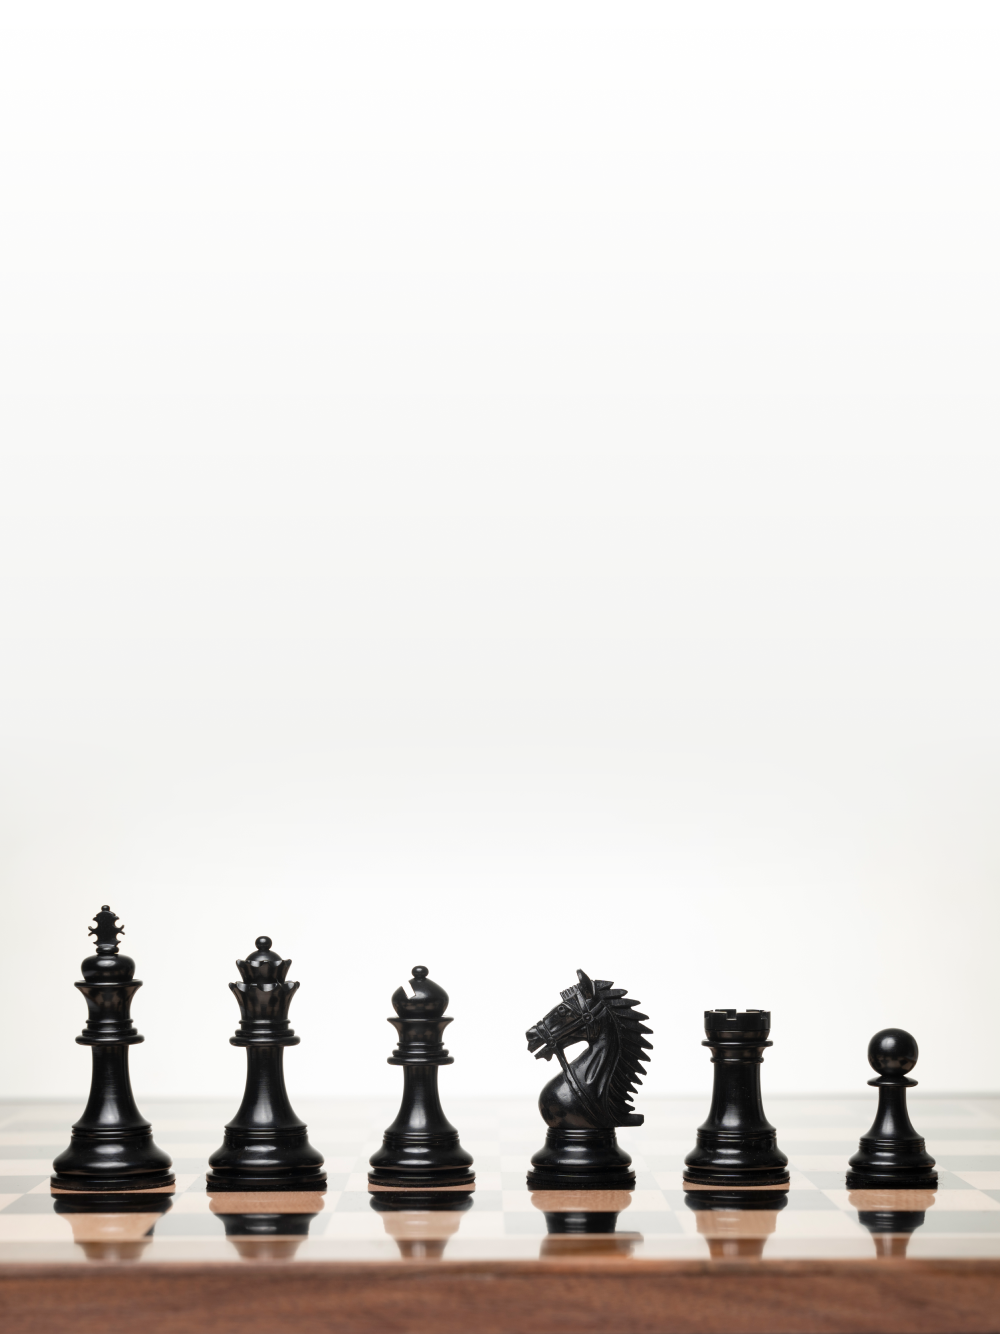 Bridle chess set